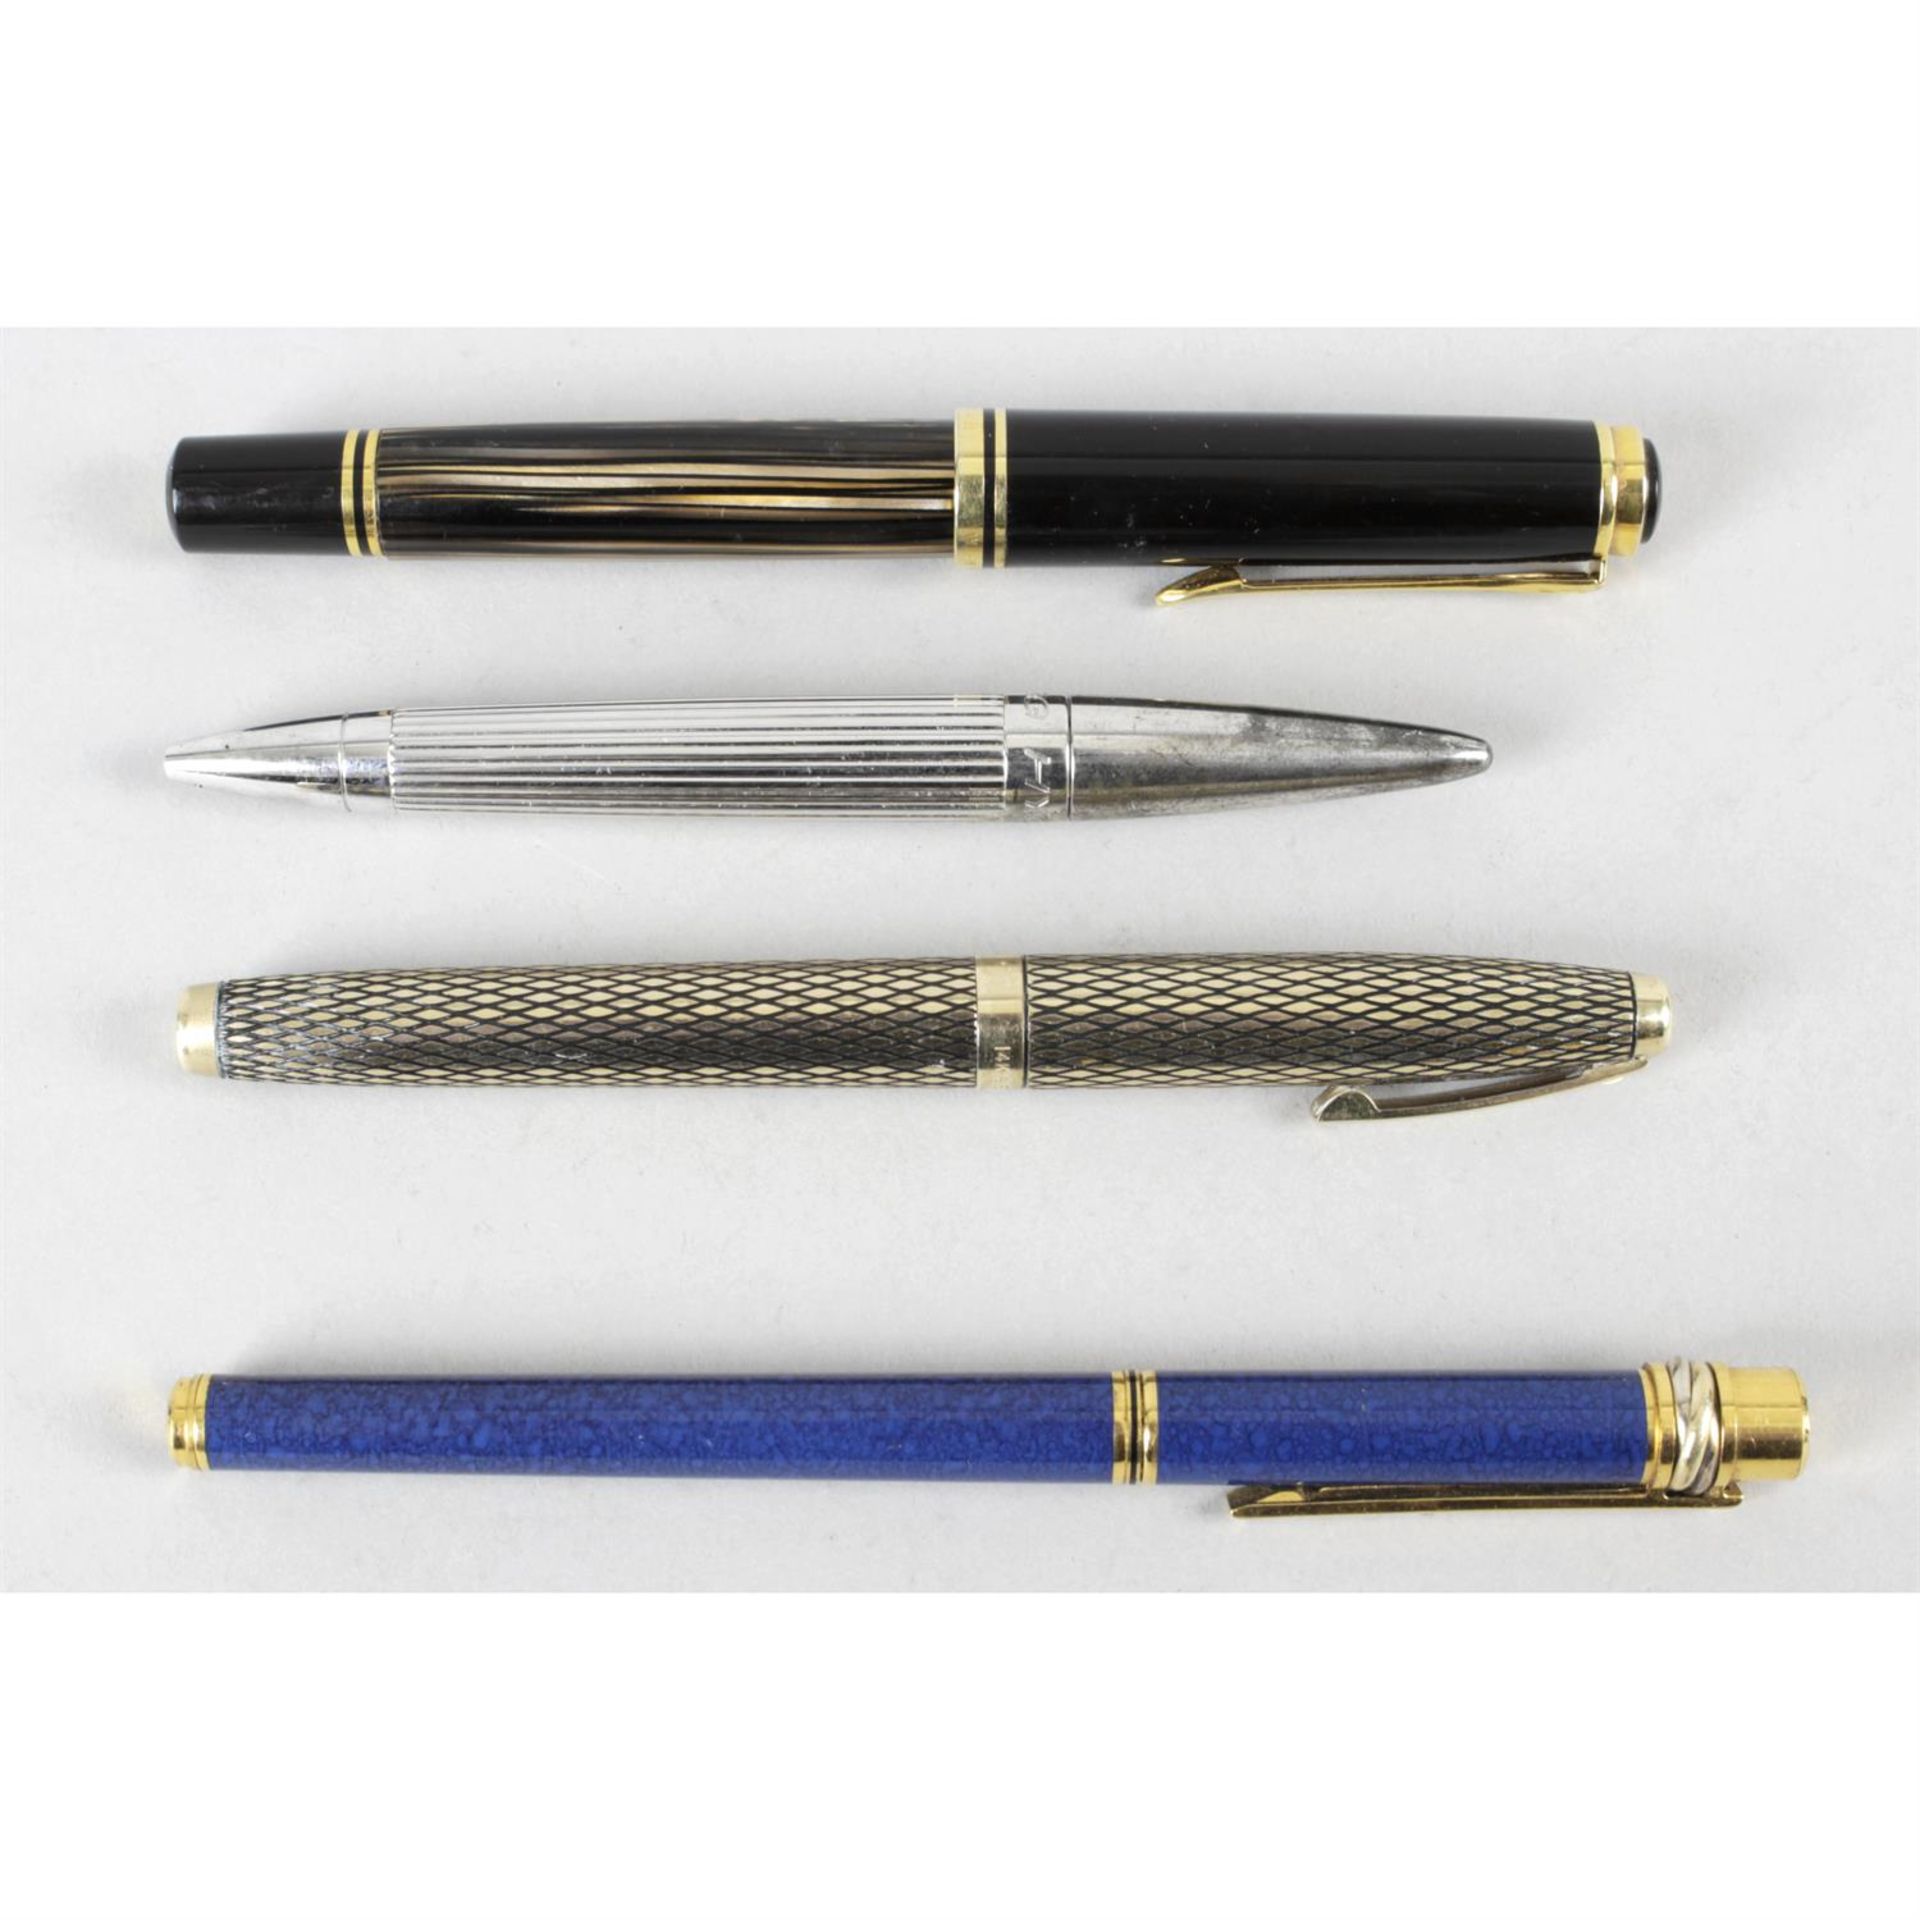 A Must De Cartier fountain pen, a Pelikan fountain pen, a Vorg Hysek propelling pen and a Sheaffer